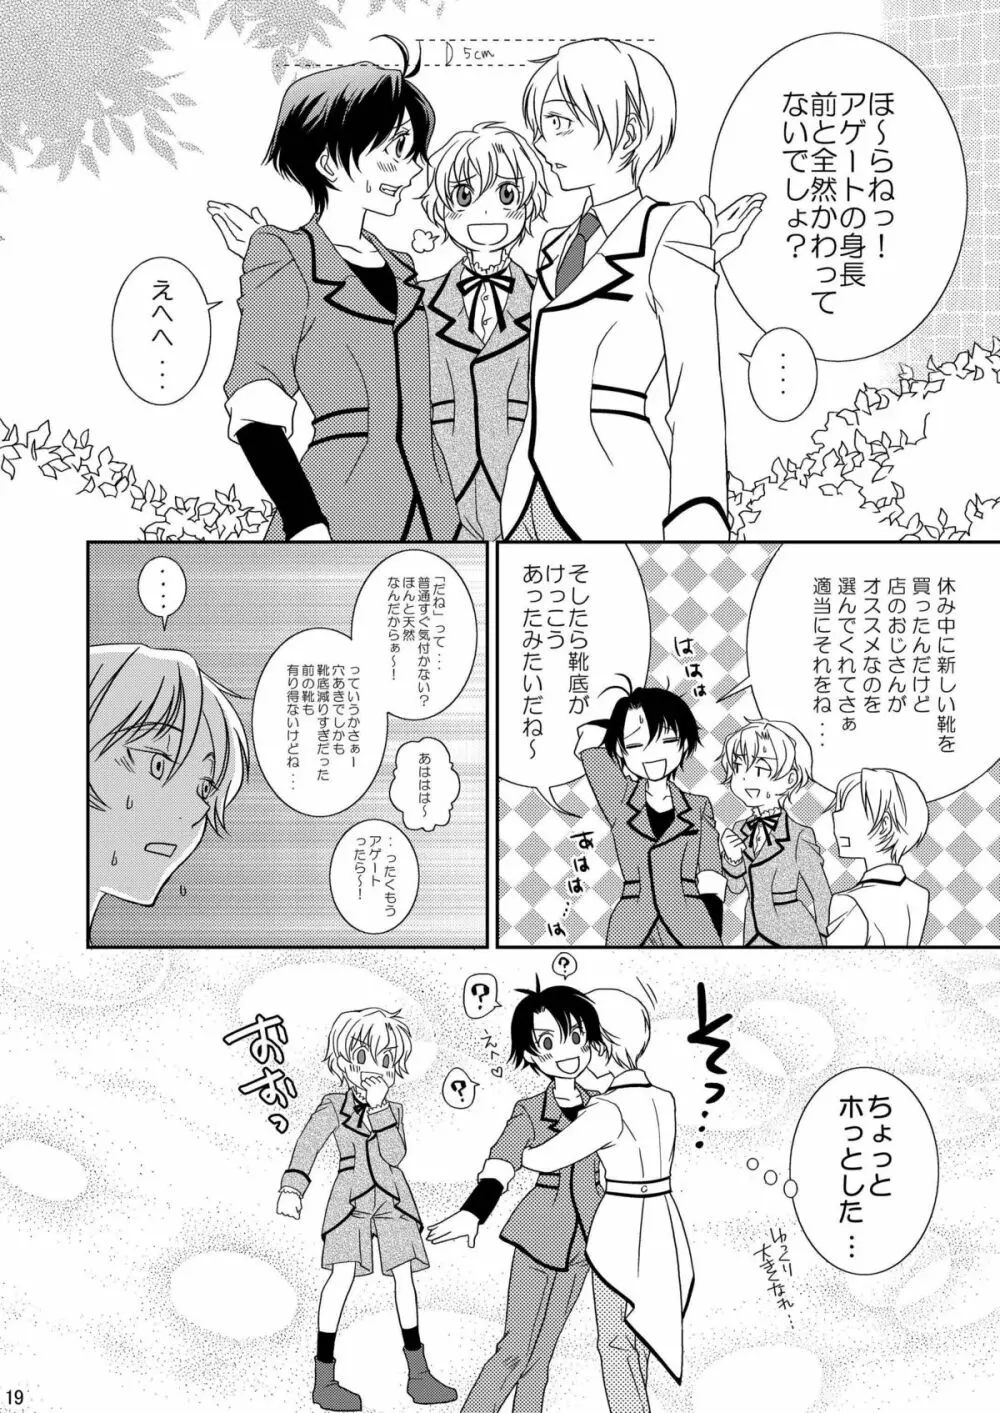 Re: ぷれい2 - page19